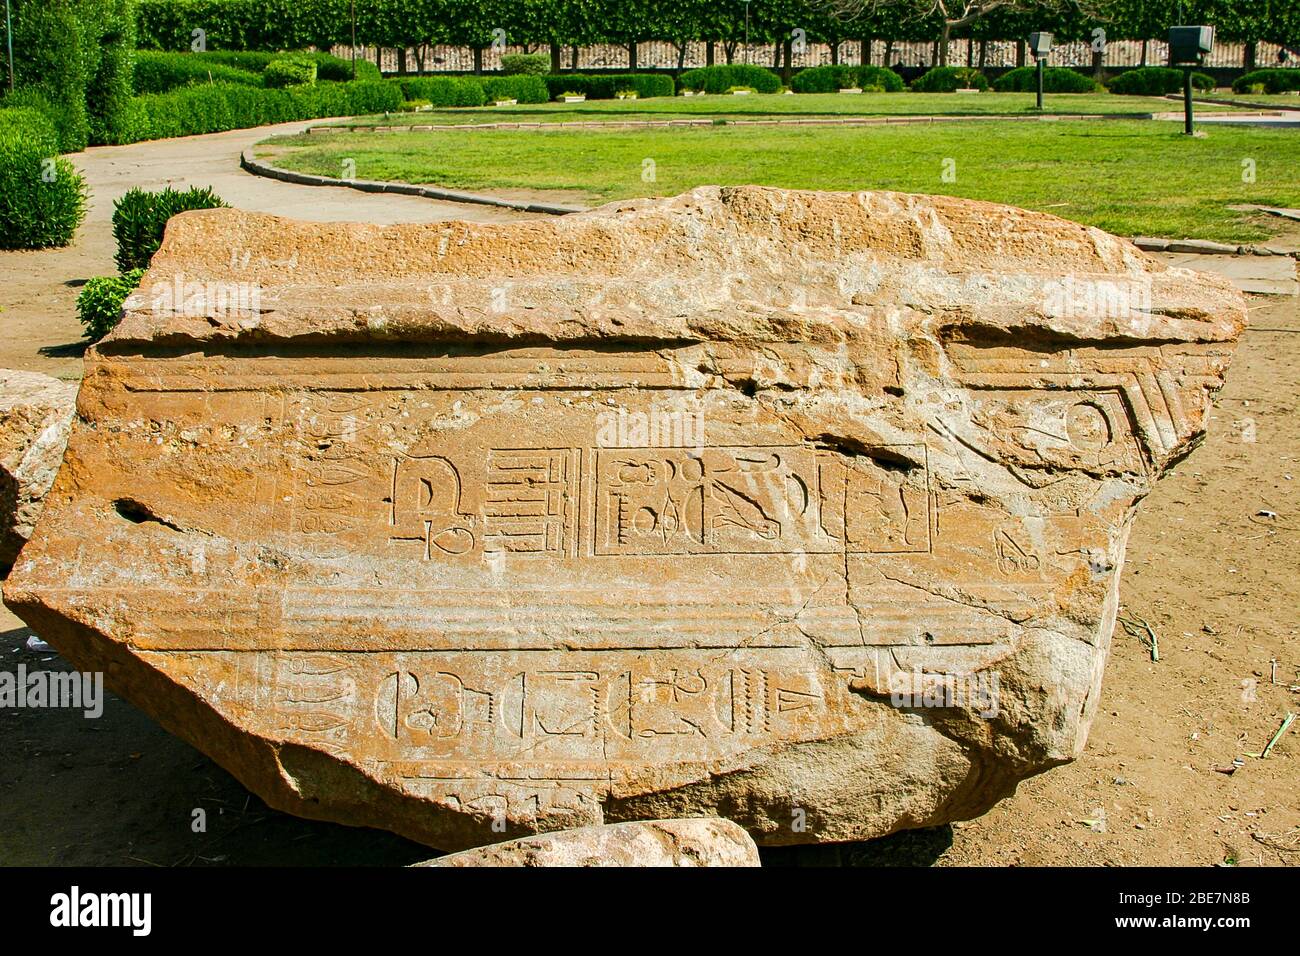 Egypt, Cairo, Heliopolis, open air museum, obelisk parc. Names of Touthmosis III, in a non academic manner. Stock Photo